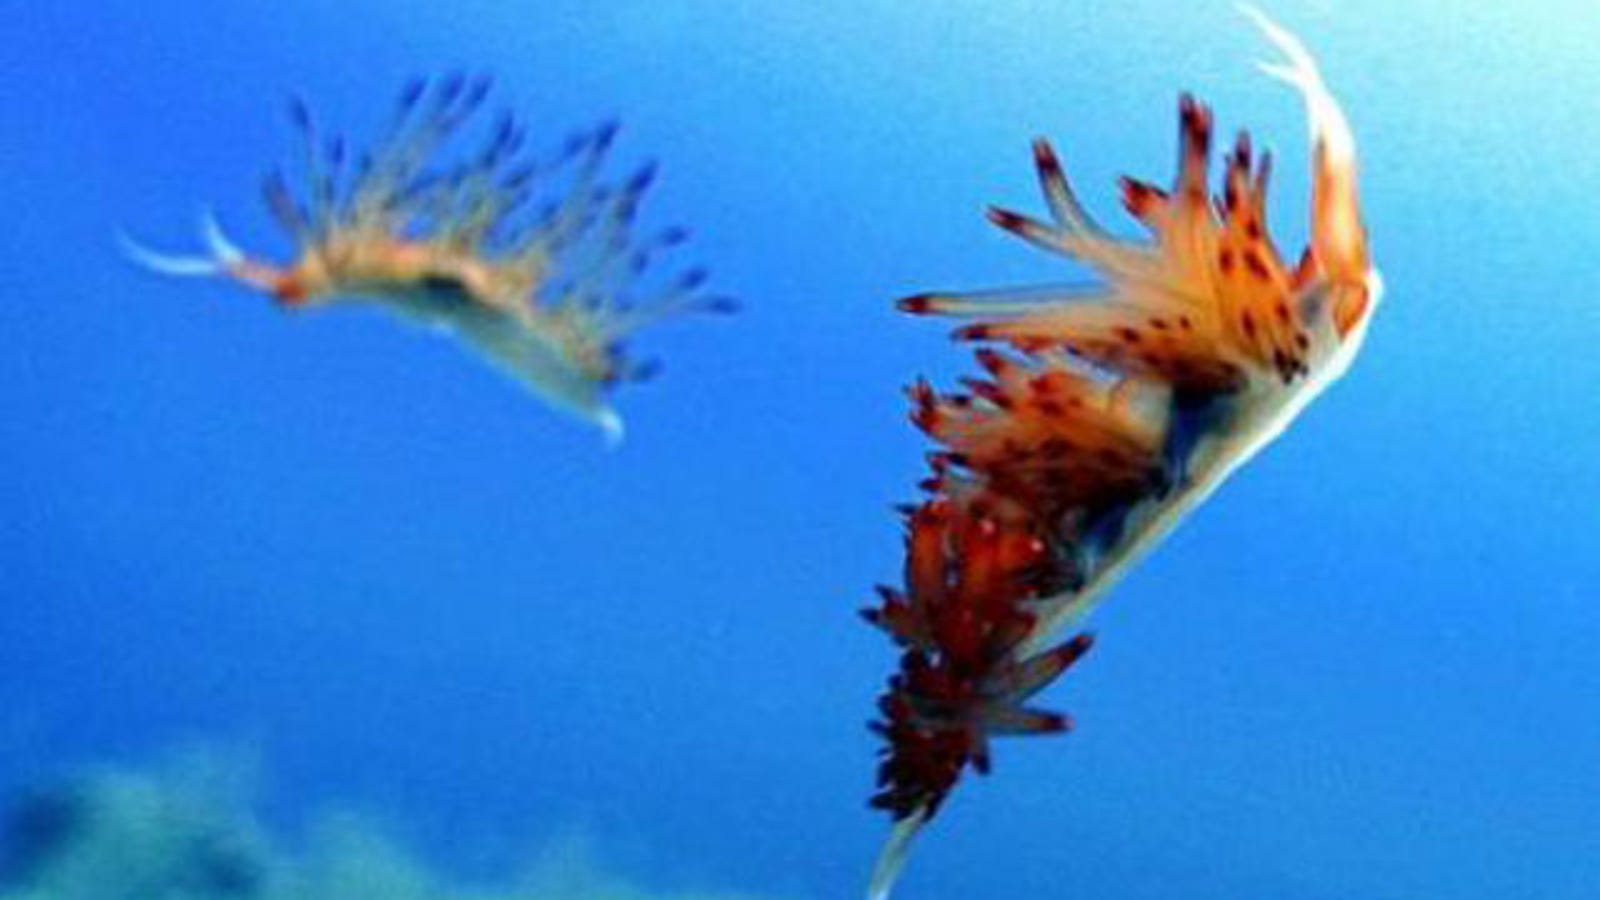 Sea Slugs Detachable Penis Grows Back Again And Again After Sex